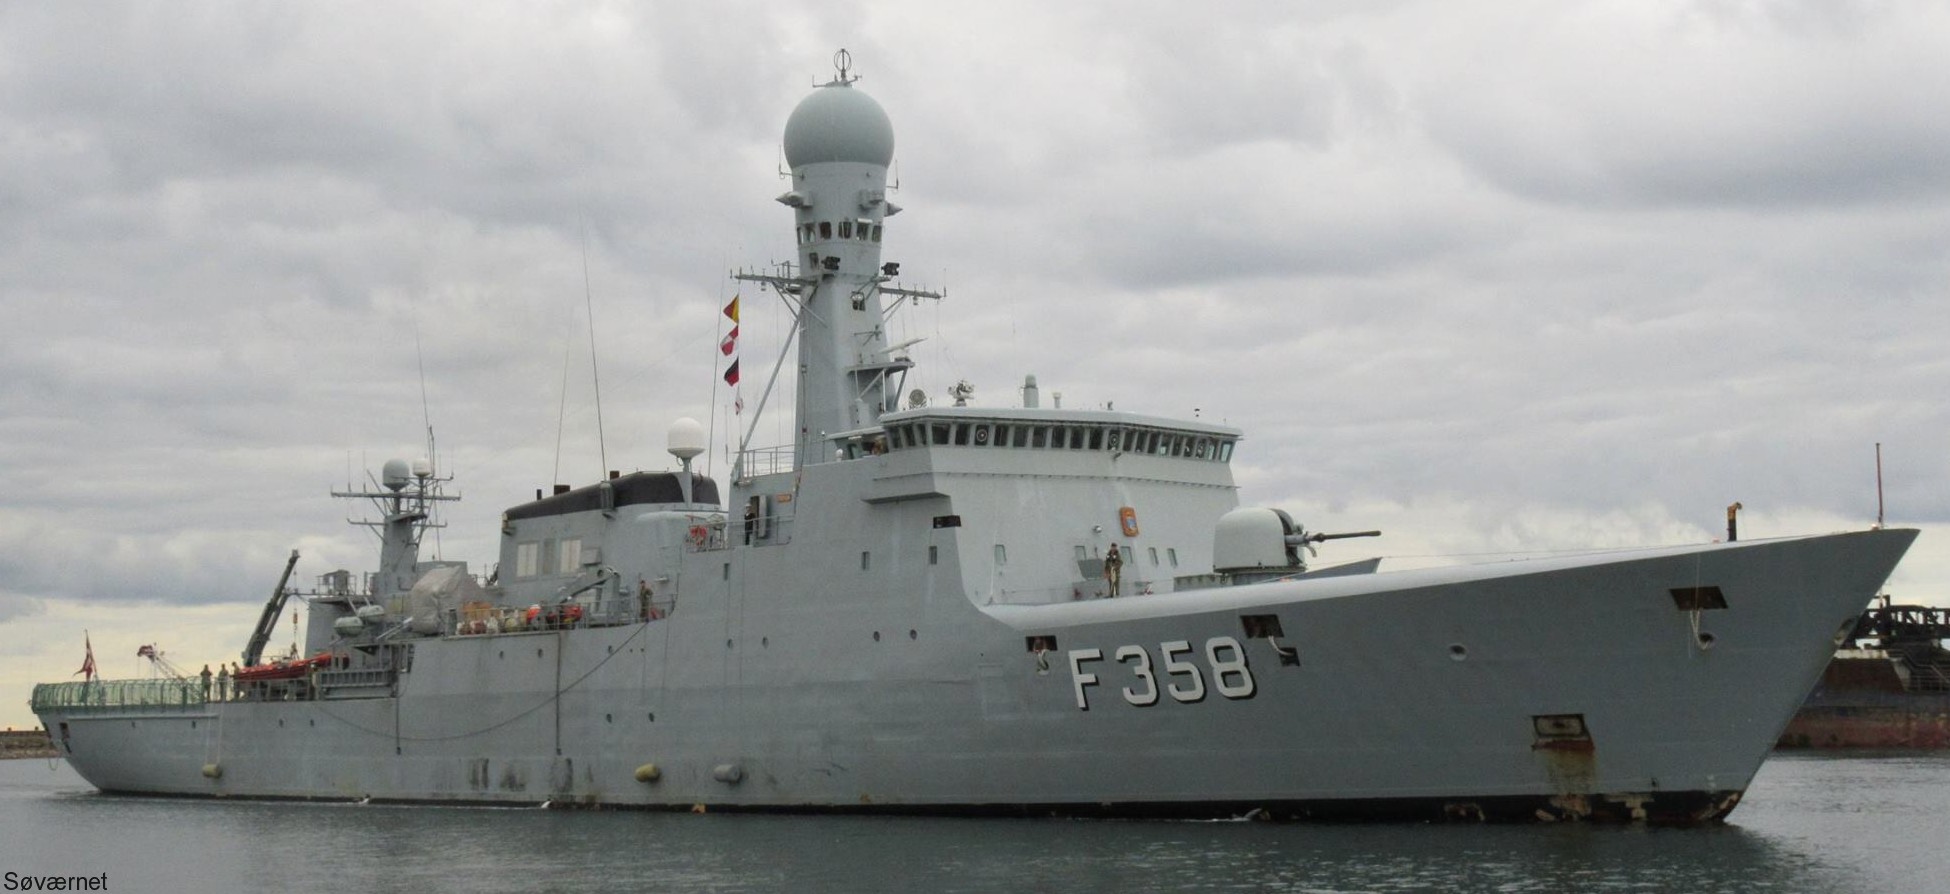 f-358 hdms triton thetis class ocean patrol frigate royal danish navy kongelige danske marine kdm inspektionsskibet 31